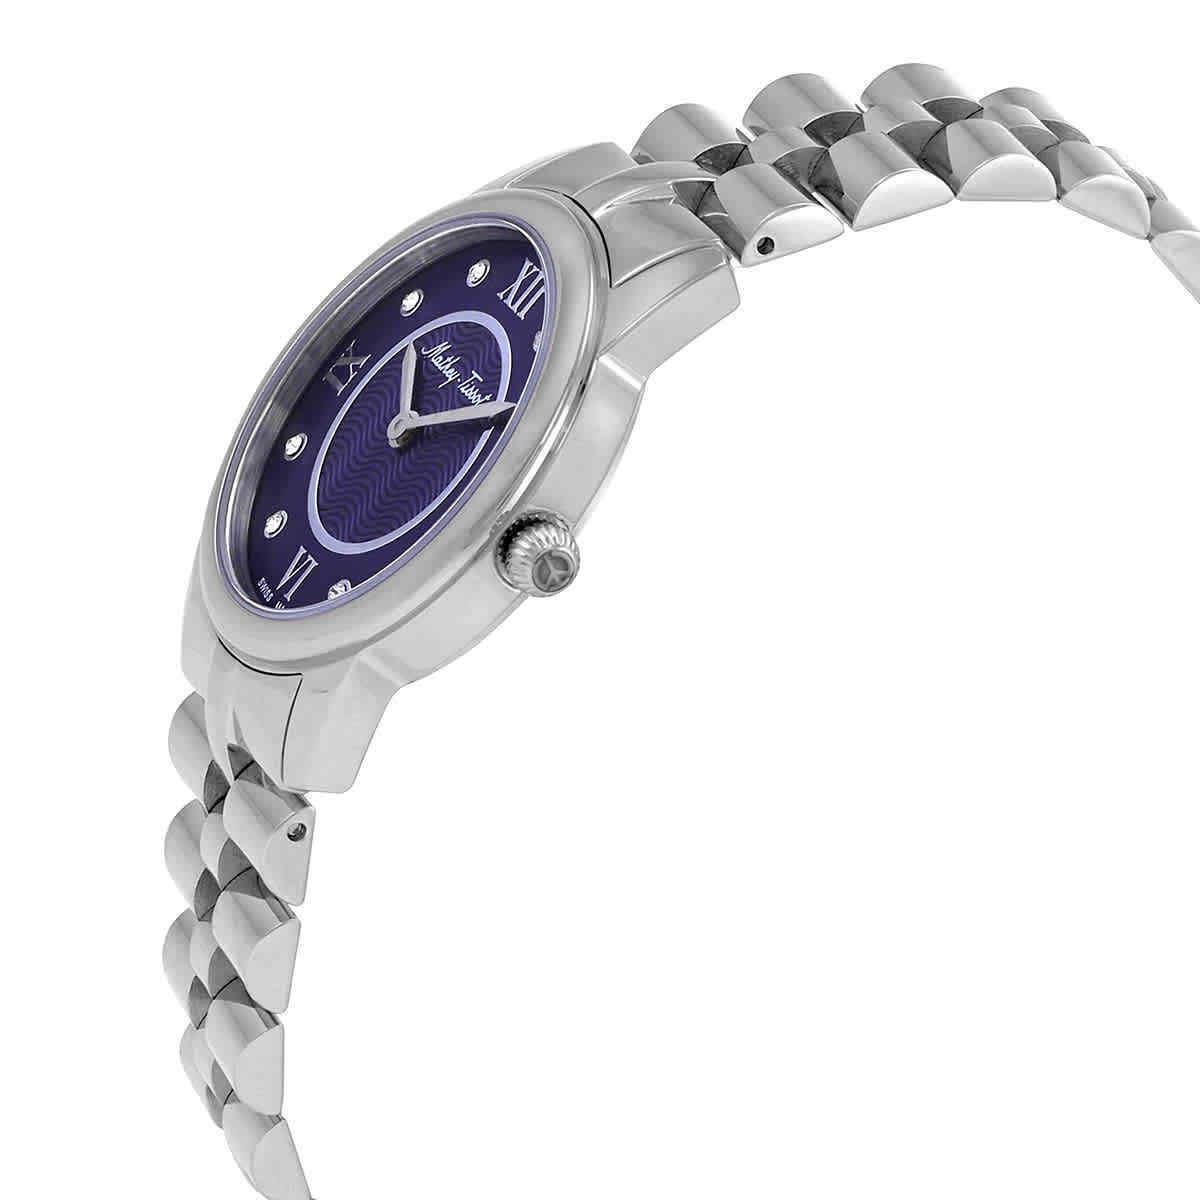 Mathey-tissot Artemis Quartz Crystal Blue Dial Ladies Watch D1086ABU - Dial: Blue, Band: Silver-tone, Bezel: Silver-tone